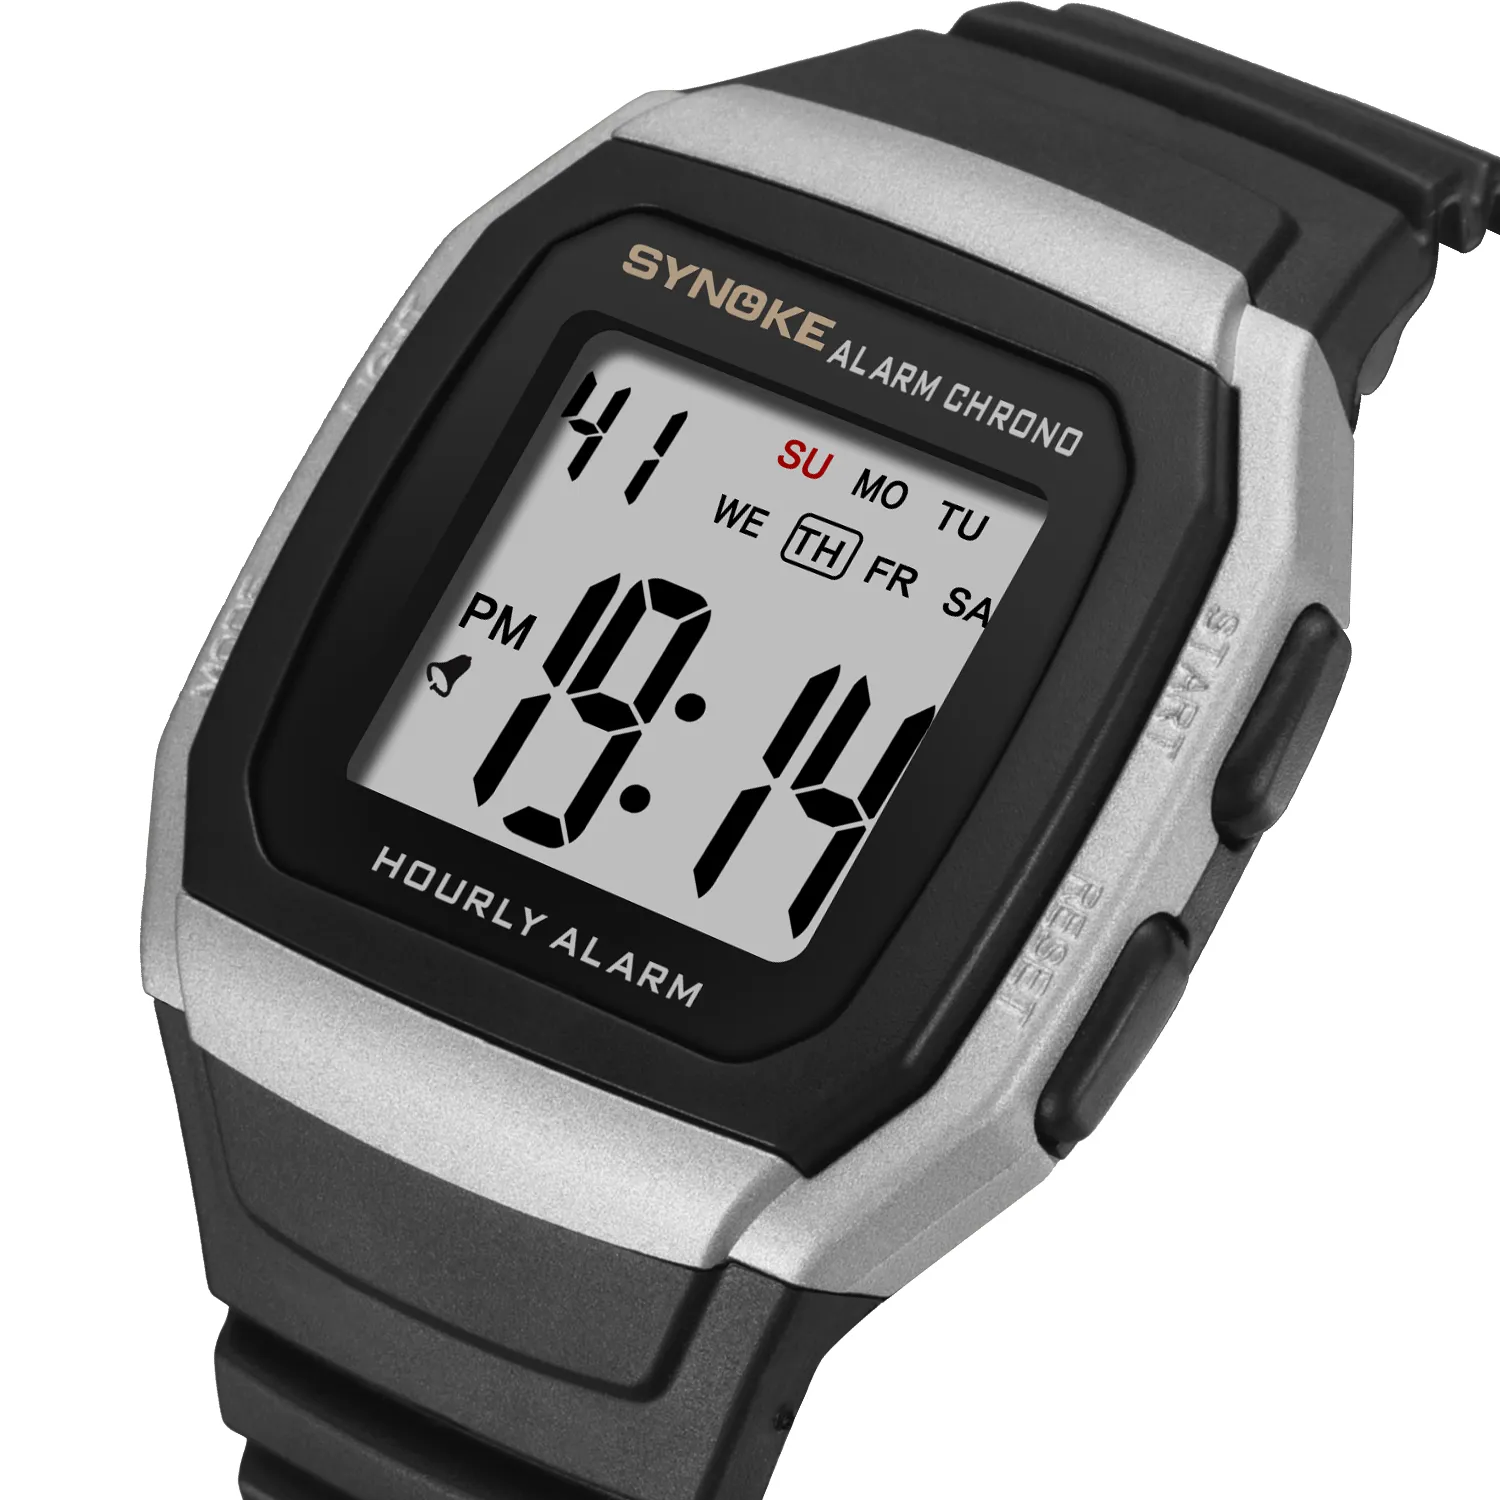 SYNOKE Digital Watch Men Sport Pedometer Watch Waterproof 30M Fashion Stopwatch Military Clock Relogio Digital Shock Resistant